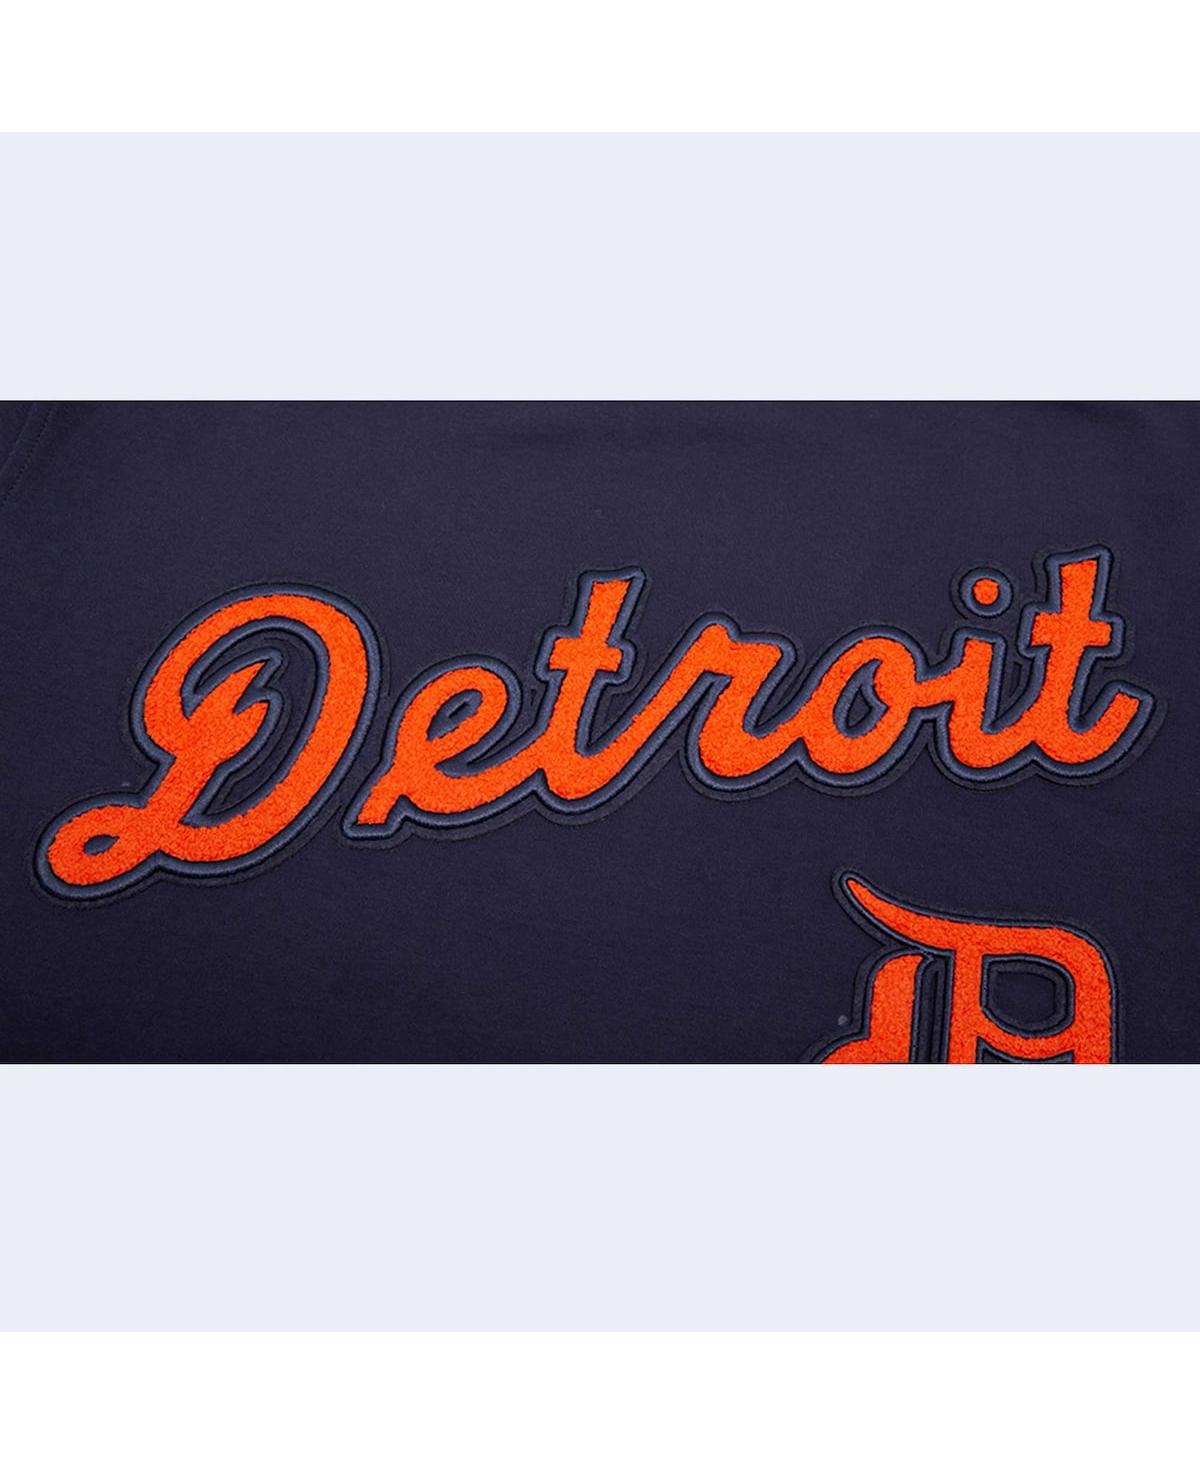 Pro Standard Men's Detroit Tigers Jersey Shirt – Unleashed